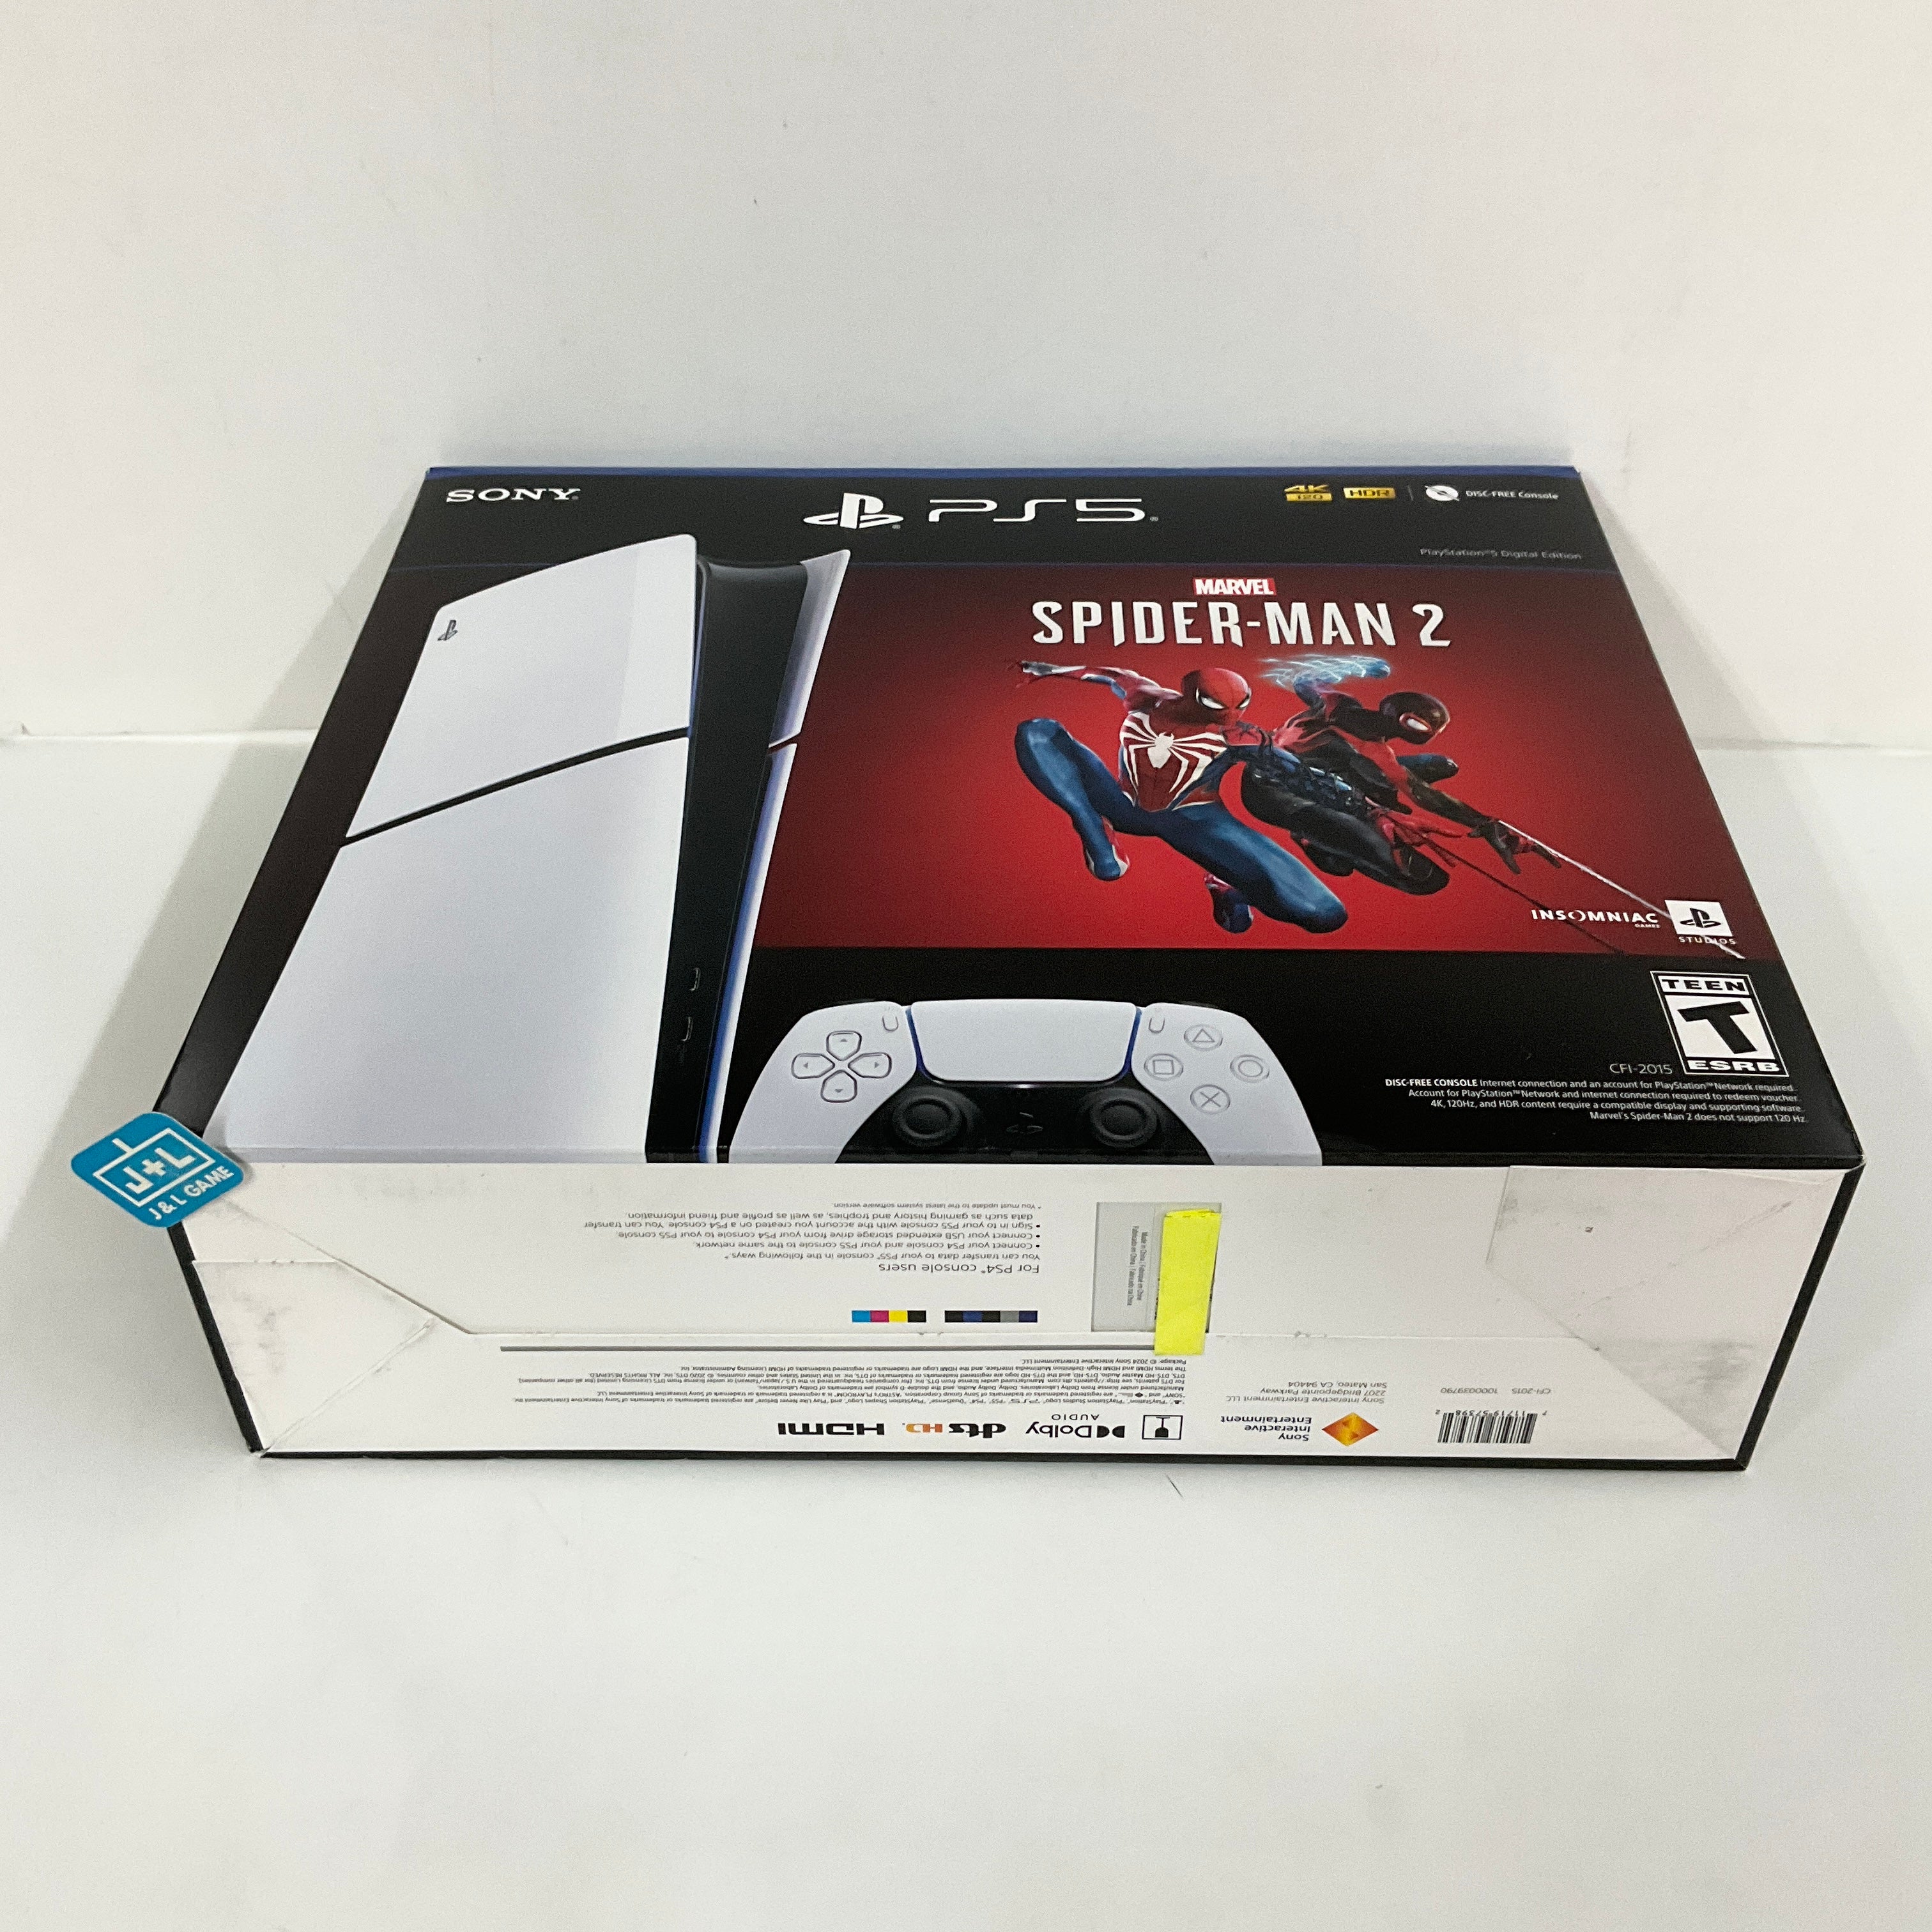 SONY PlayStation 5 Slim Digital Edition Console (Spider-Man 2 Bundle) (CFI-2015) - (PS5) PlayStation 5 Consoles PlayStation   